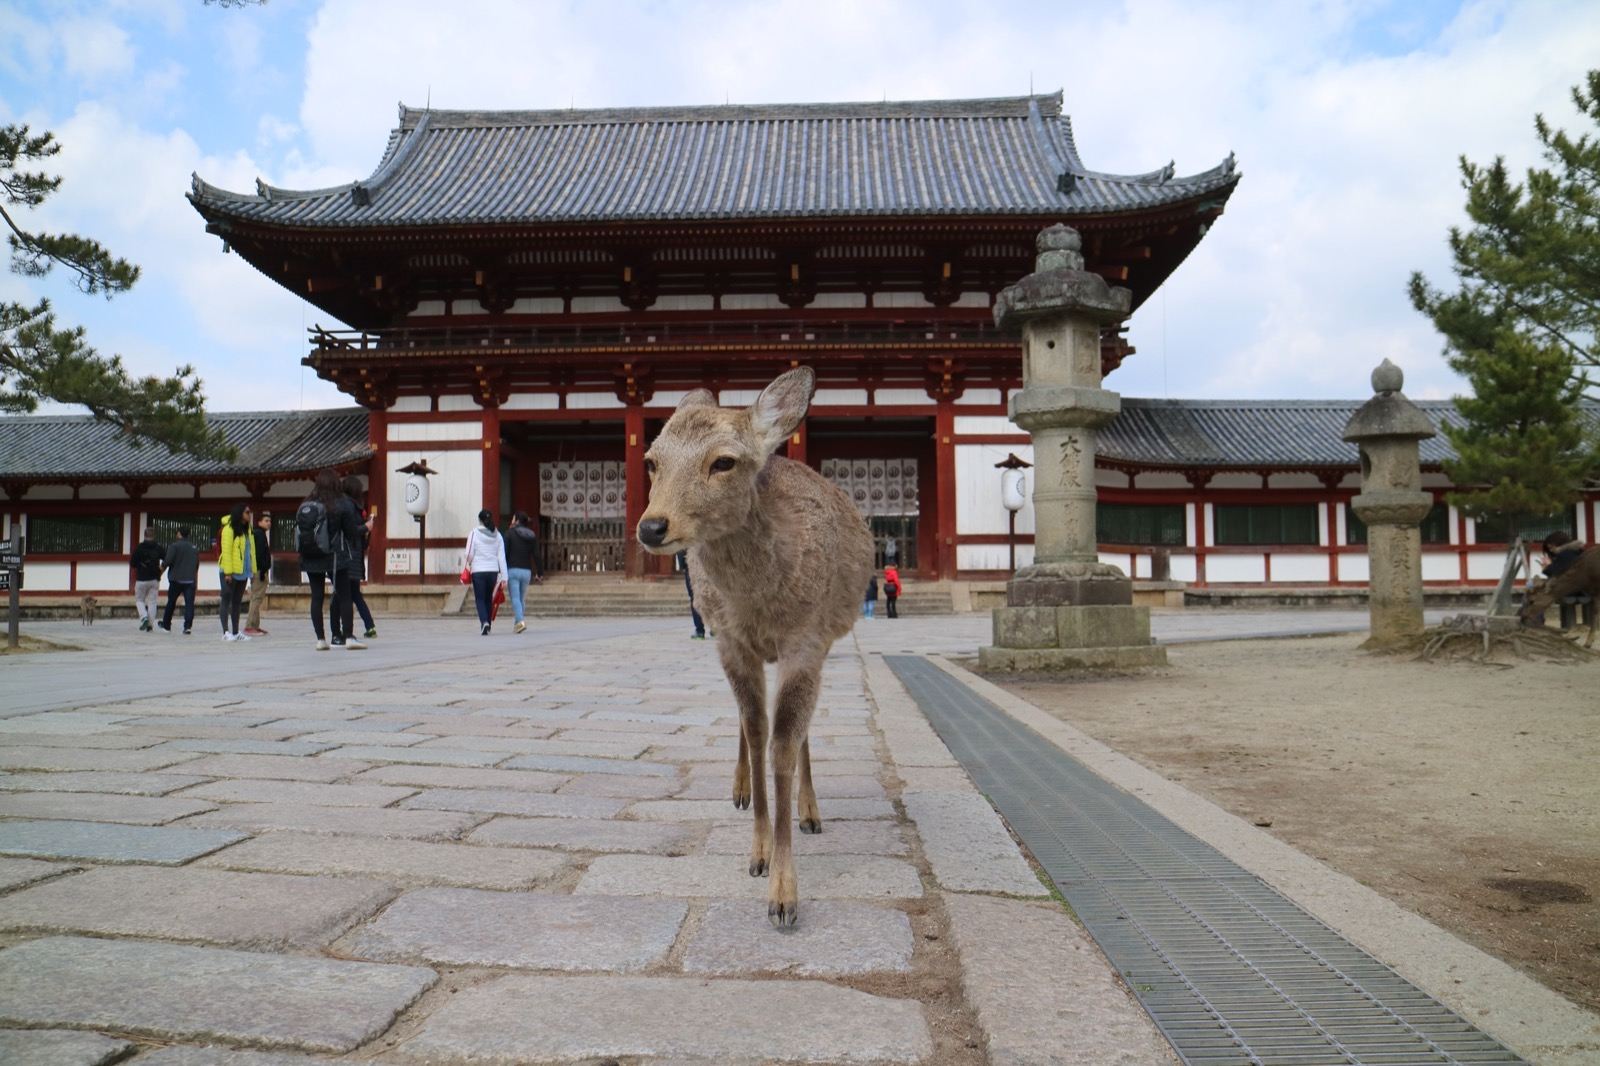 Photo of Nara, Japan (Tōdai-ji Temple, in Nara by Jim Thoburn)